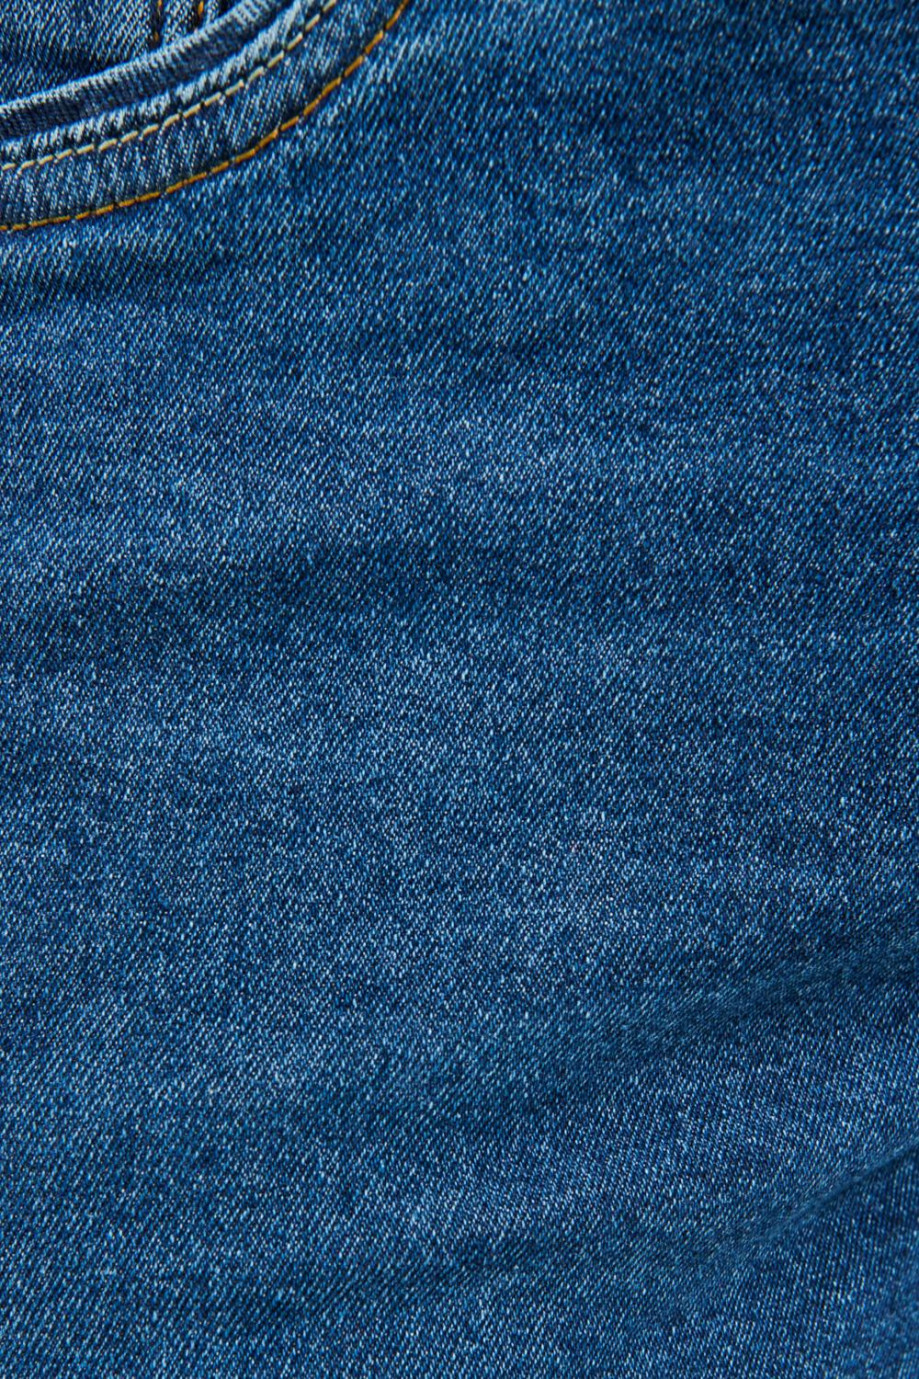 Jean skinny azul oscuro tiro bajo con costuras en contraste